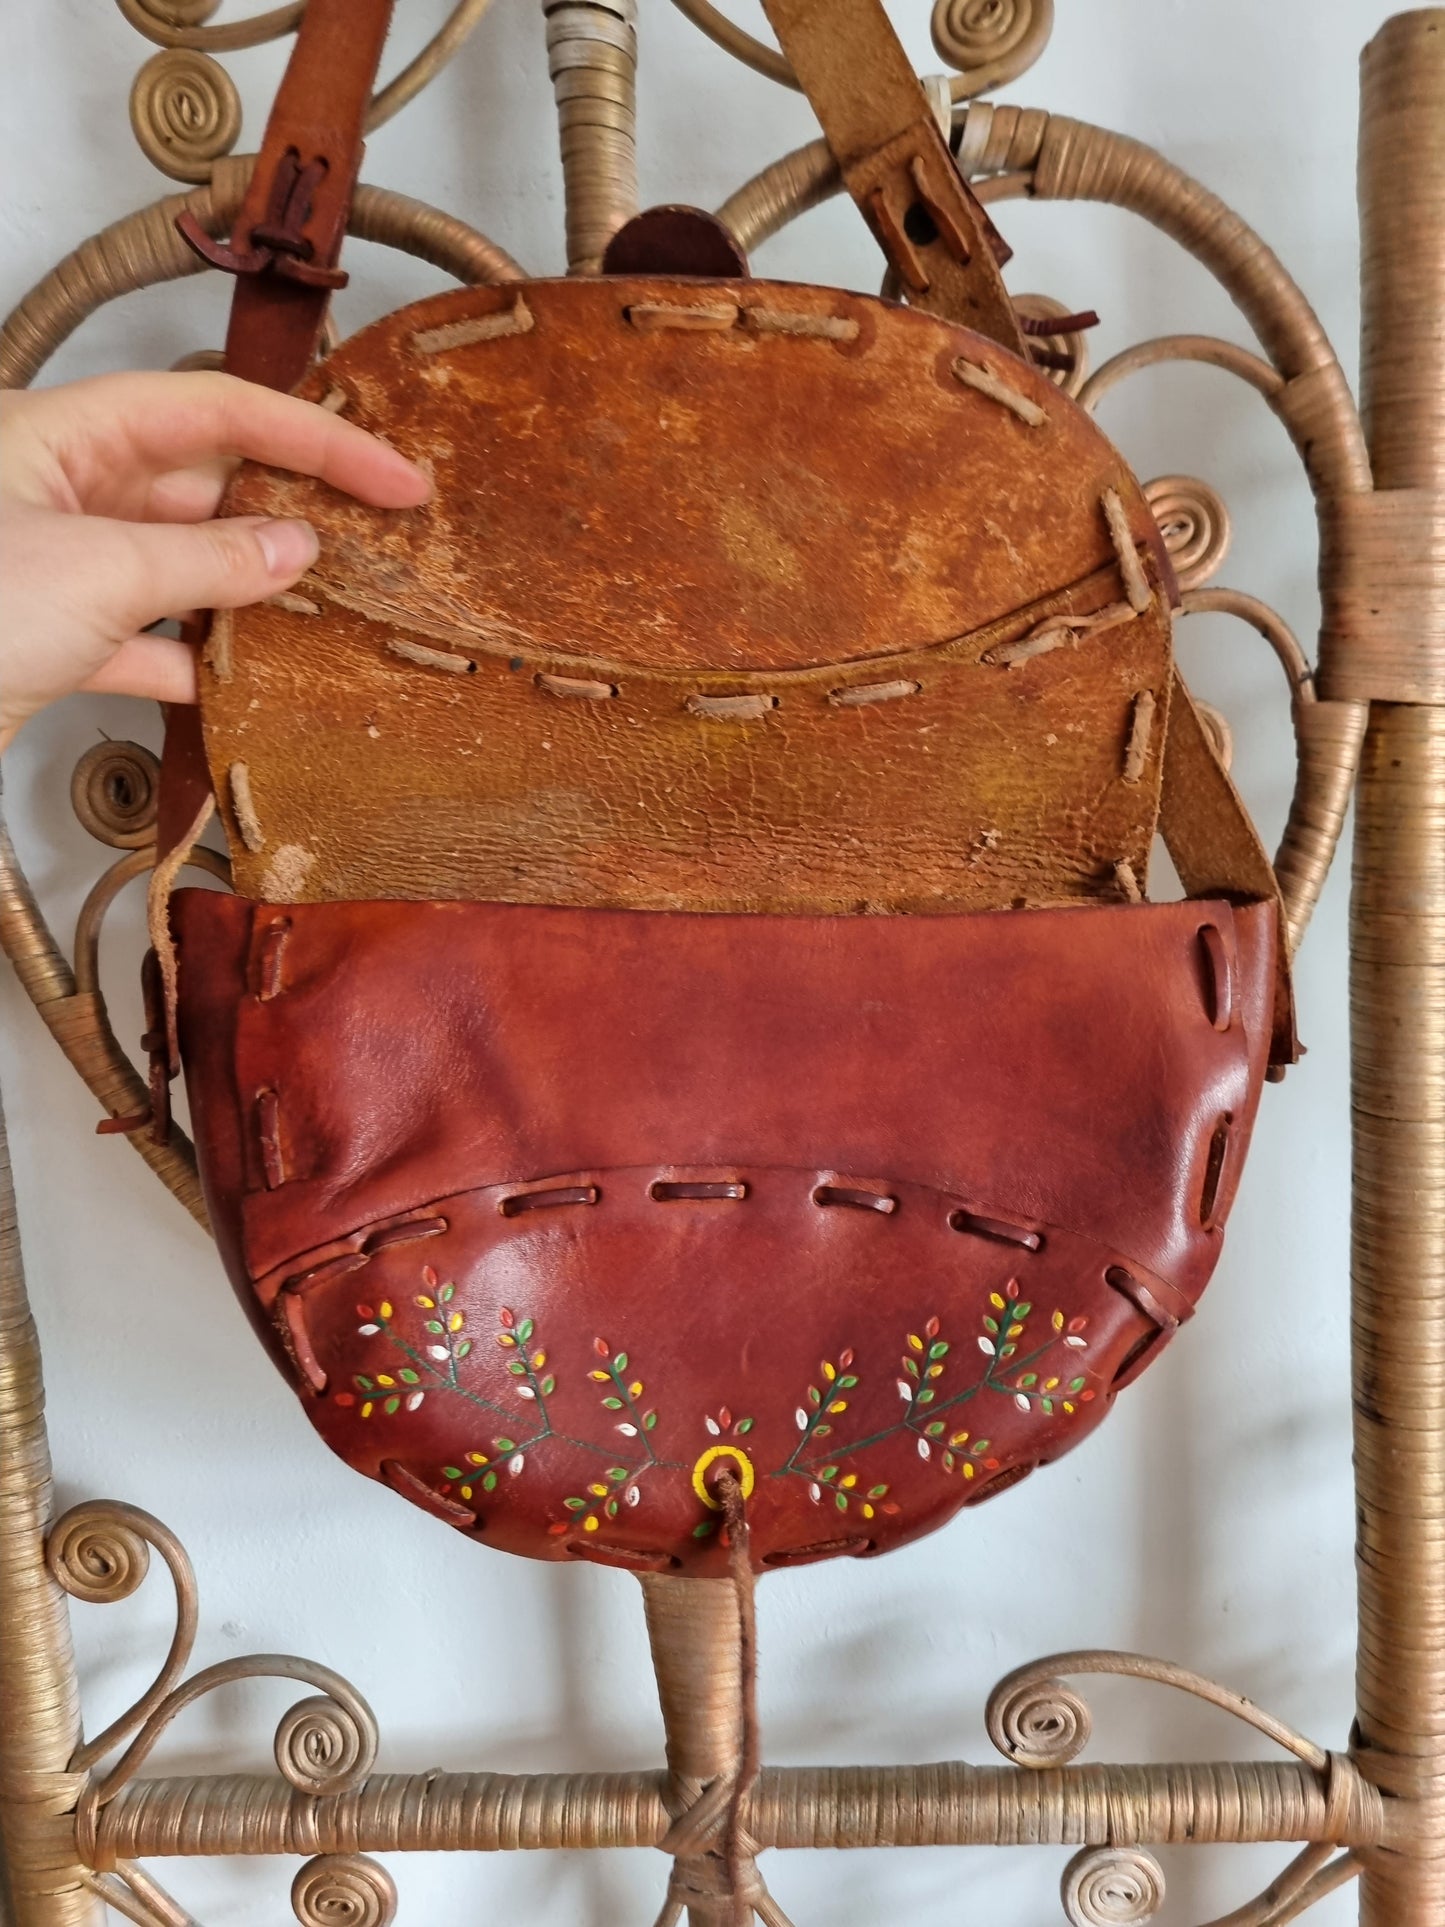 Vintage brown leather tooled bag